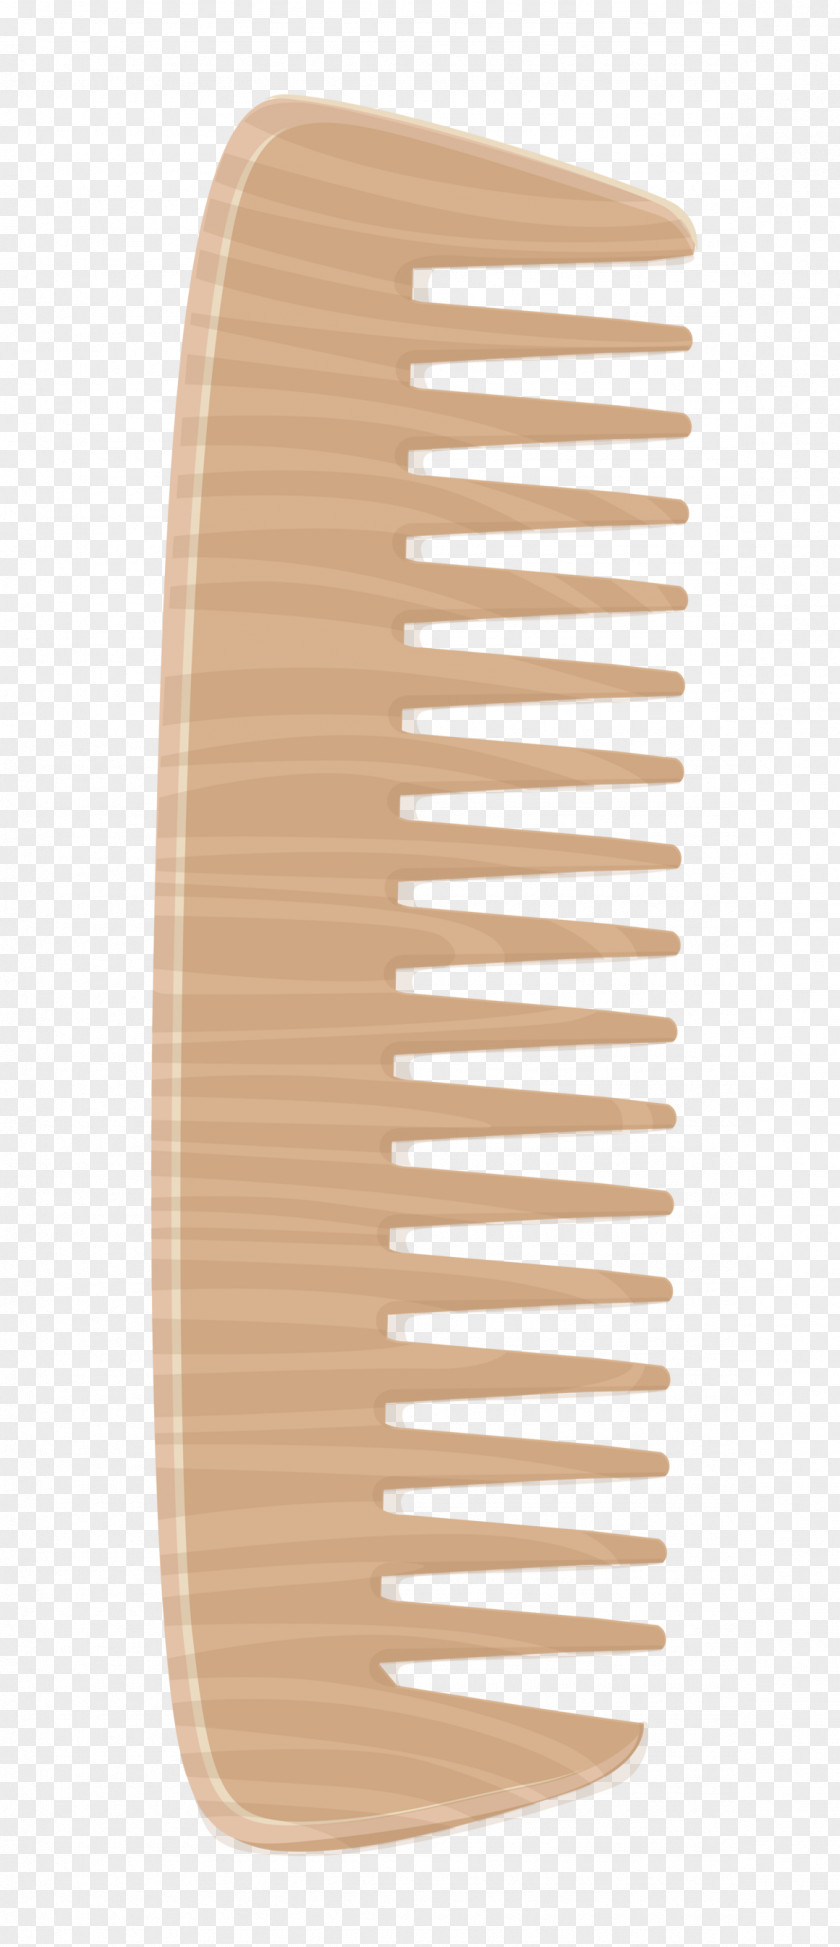 Wooden Comb Clipart Image Hair Beauty Parlour Clip Art PNG